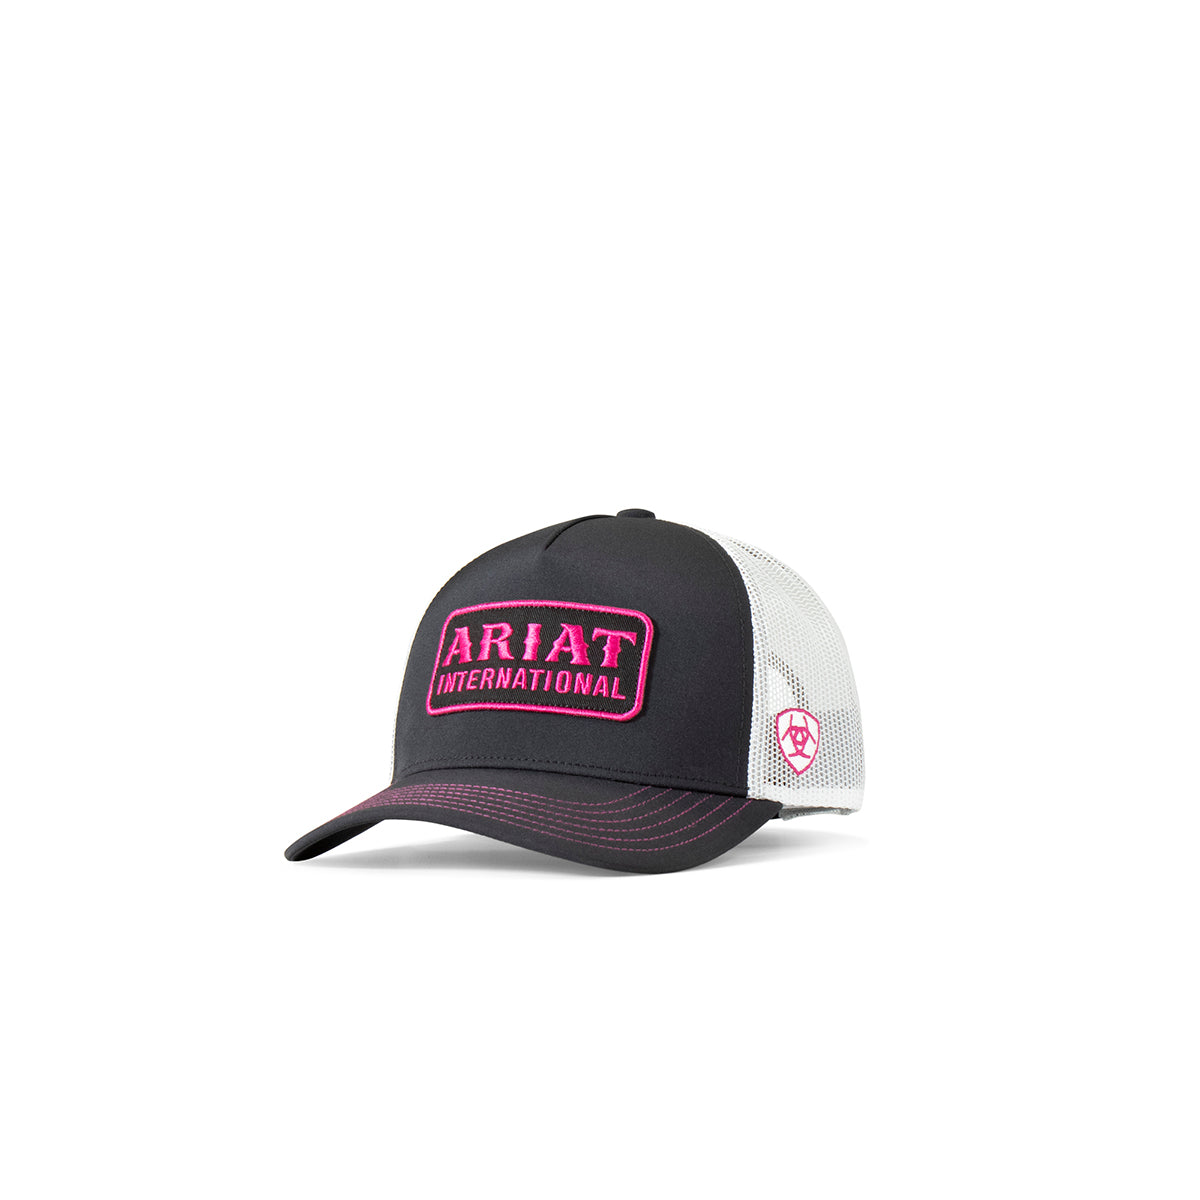 Ariat Women's Patch Cap - Black/Pink